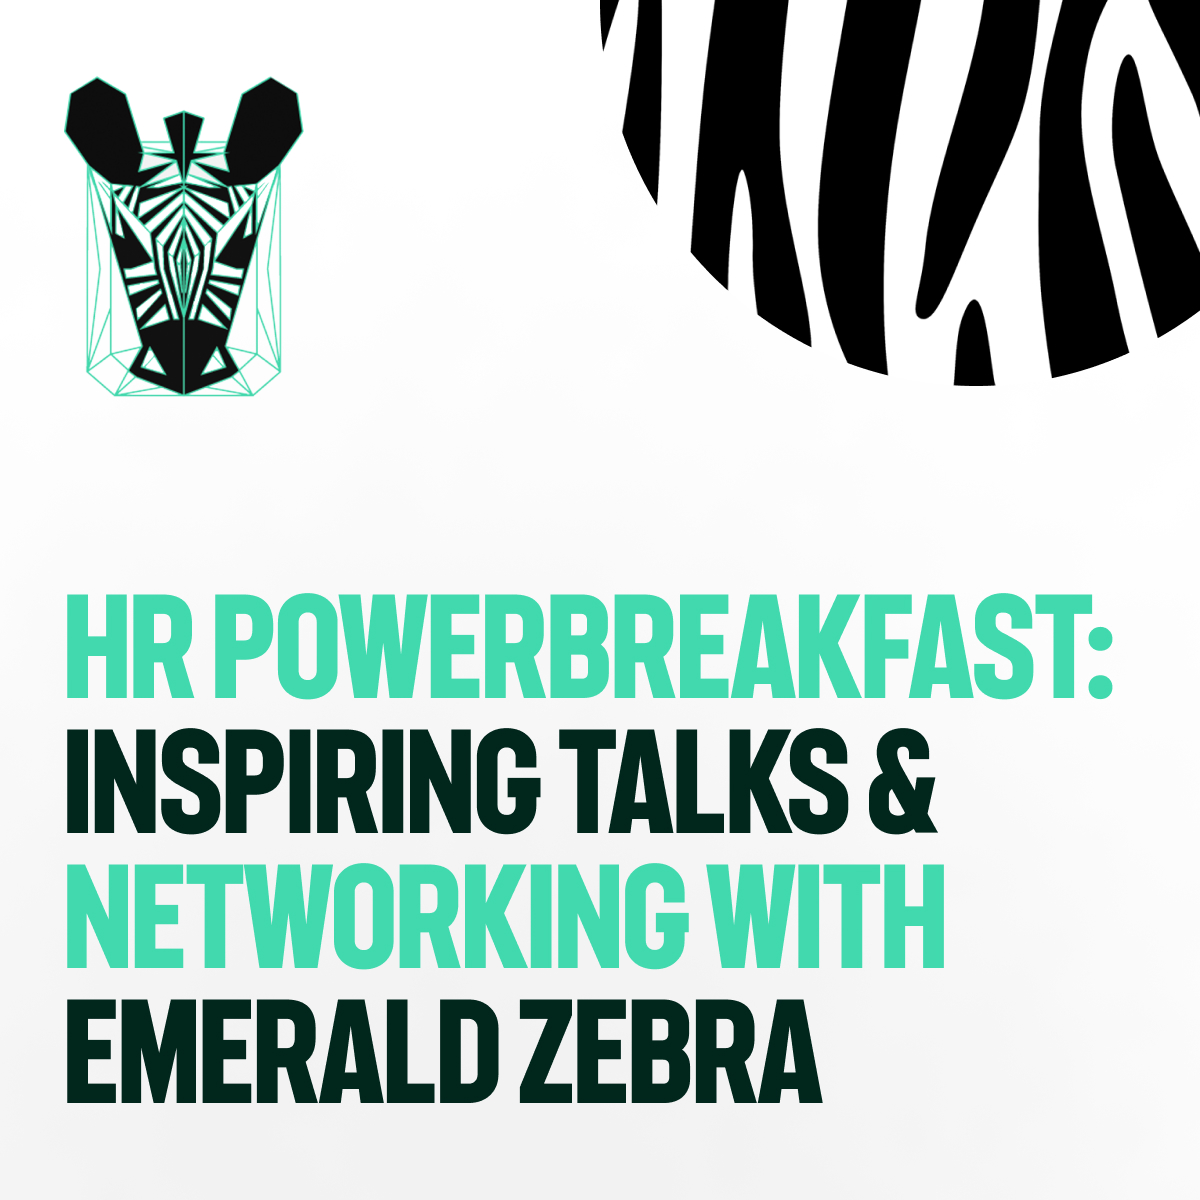 HR PowerBreakfast: Inspiring Talks & Networking with Emerald Zebra